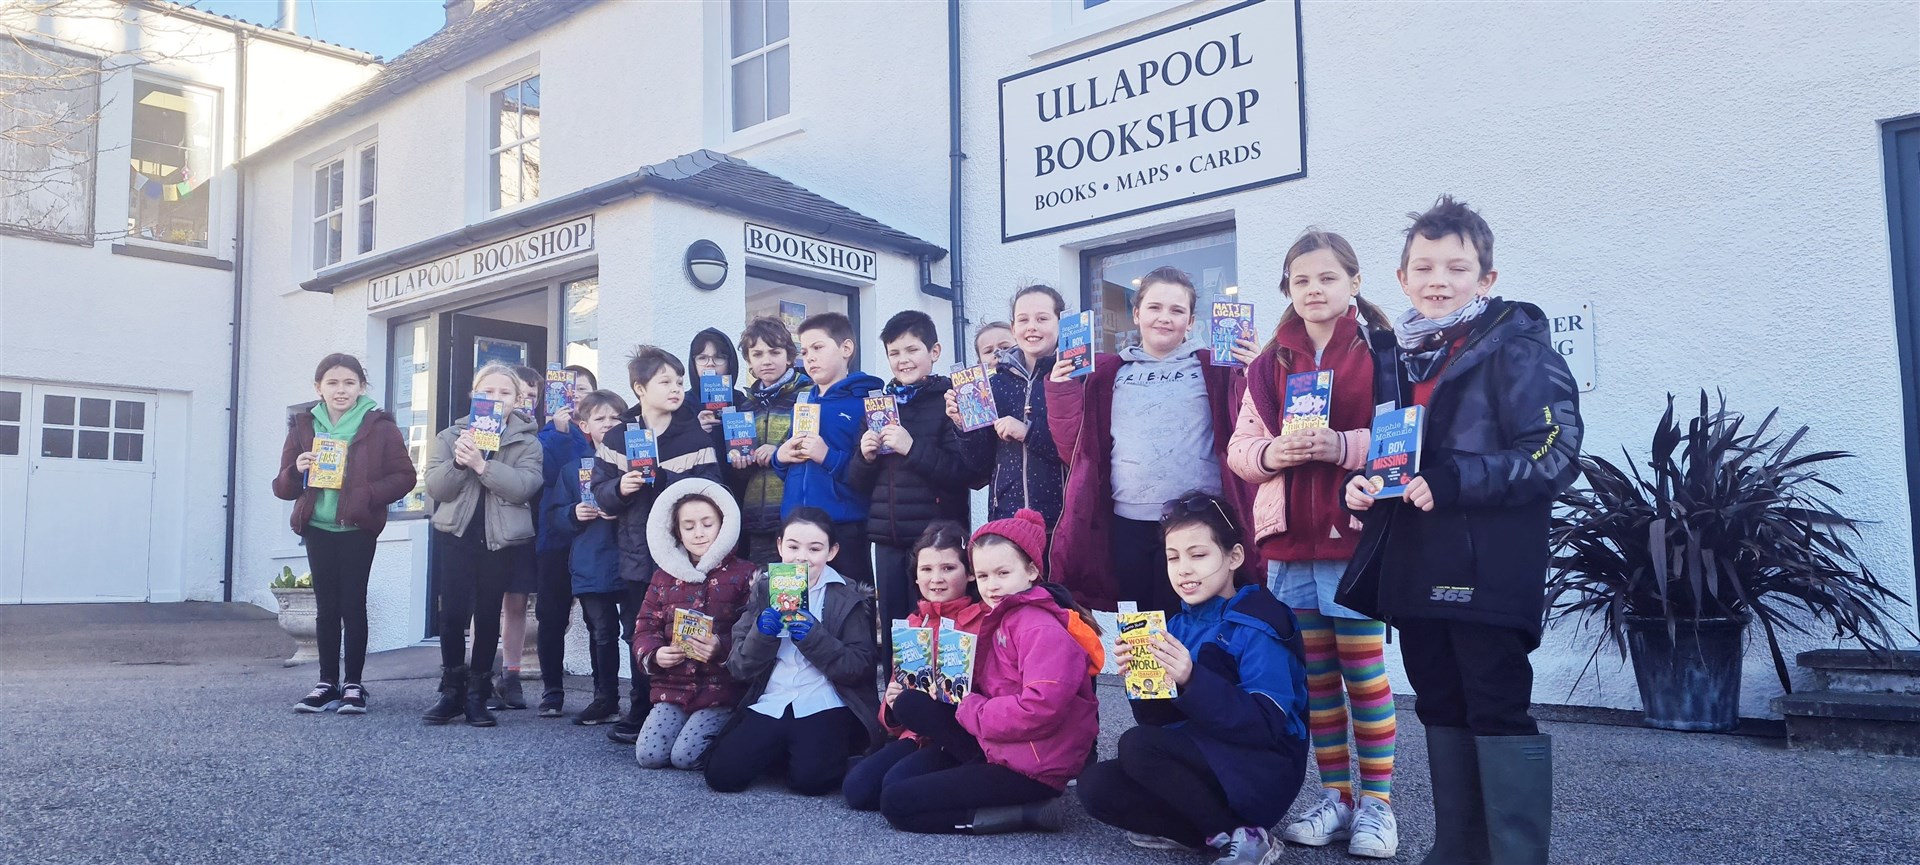 Ullapool Bookshop welcomes Gaelic Primary P4/5 from Ullapool Primary.